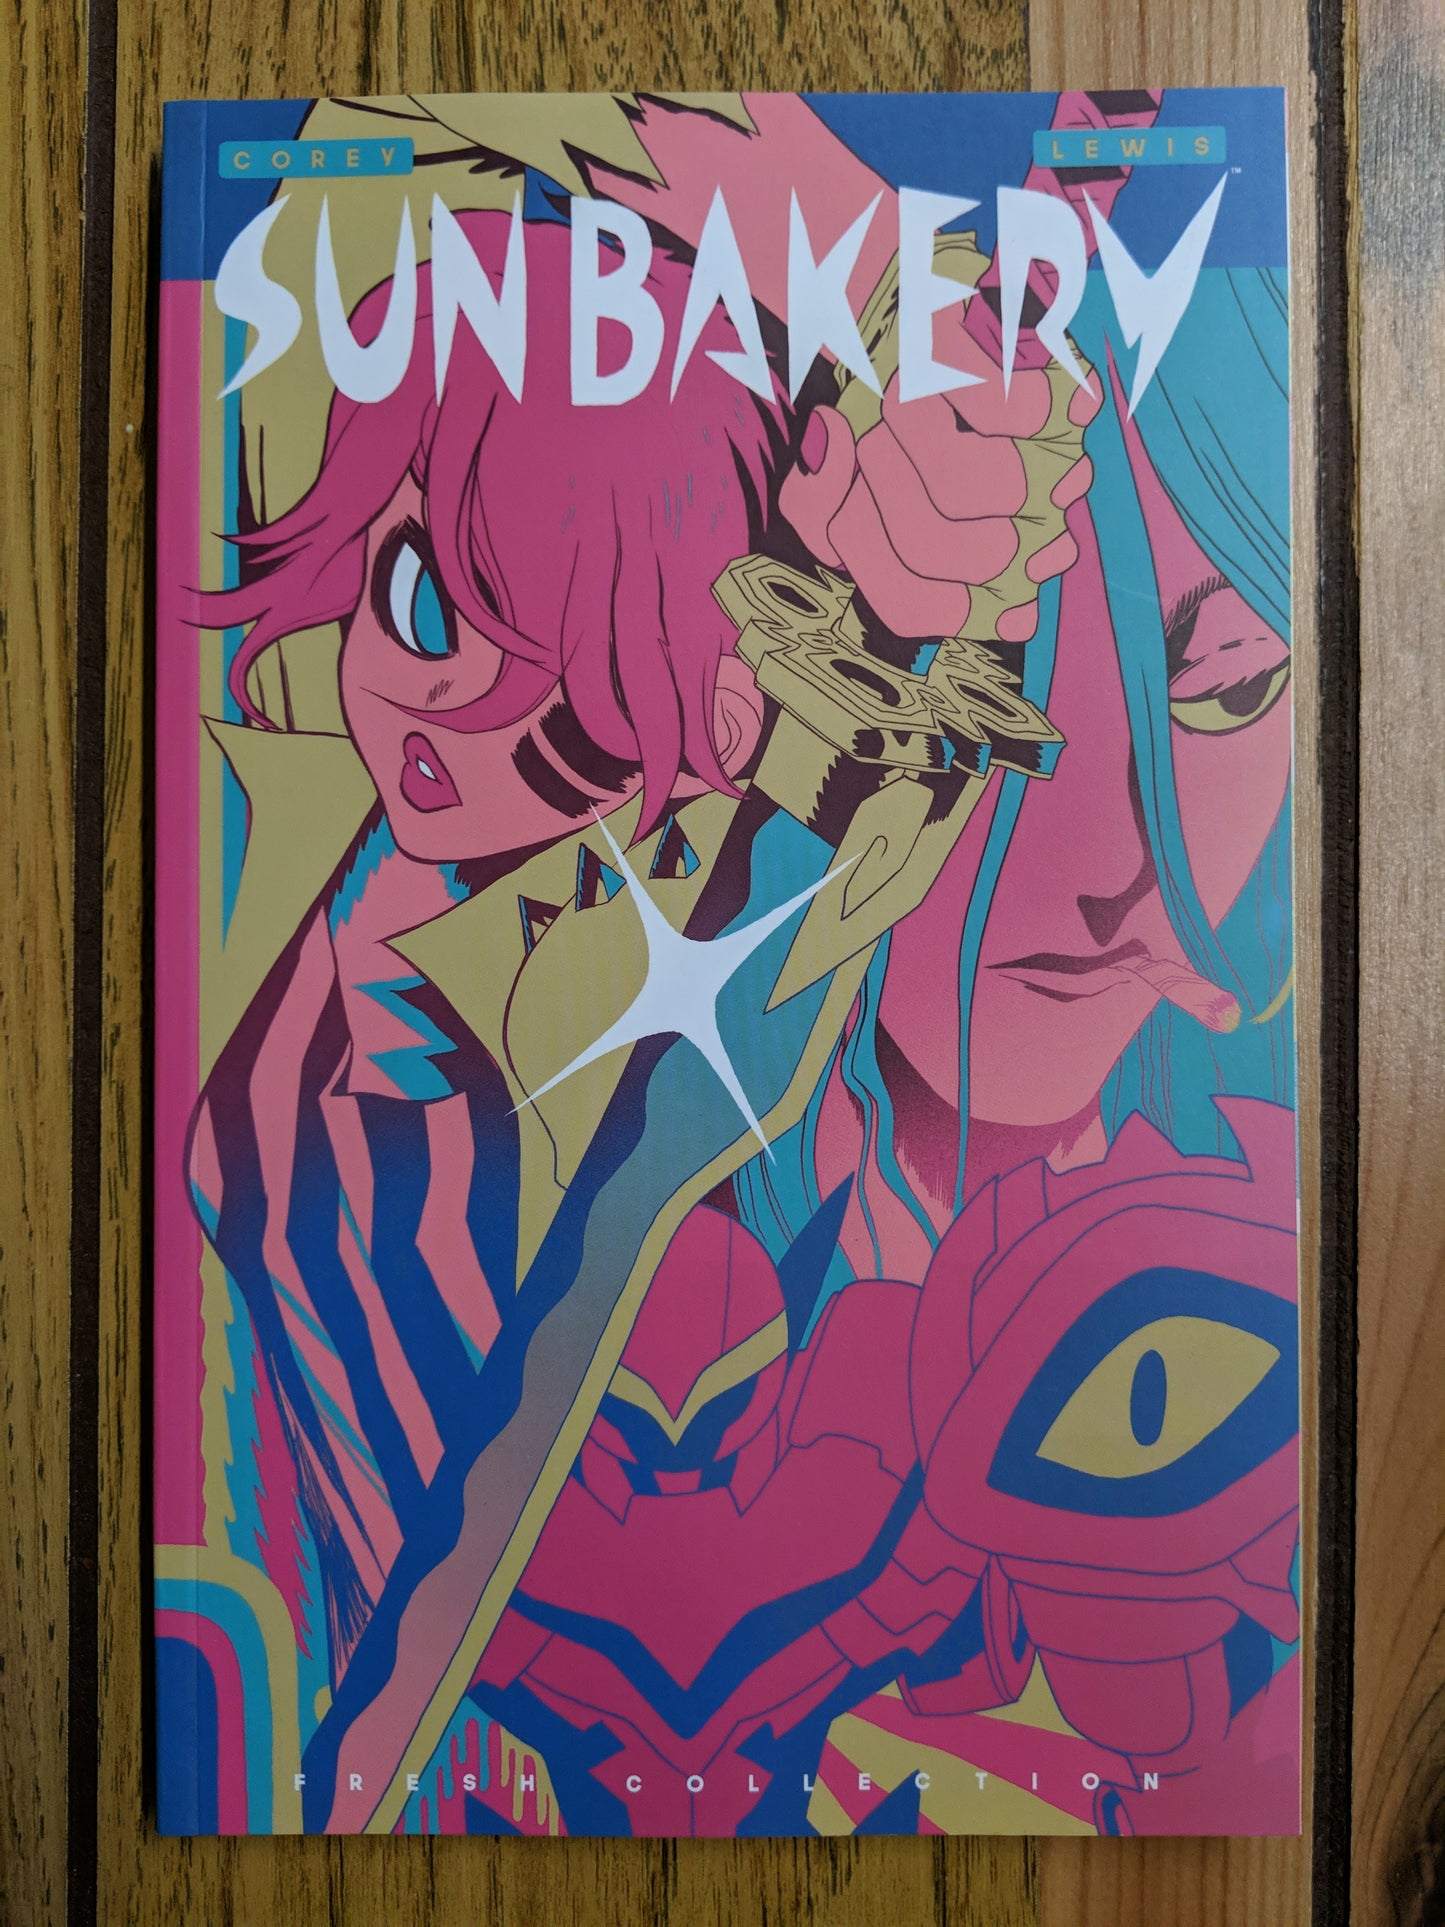 Sun Bakery: Fresh Collection